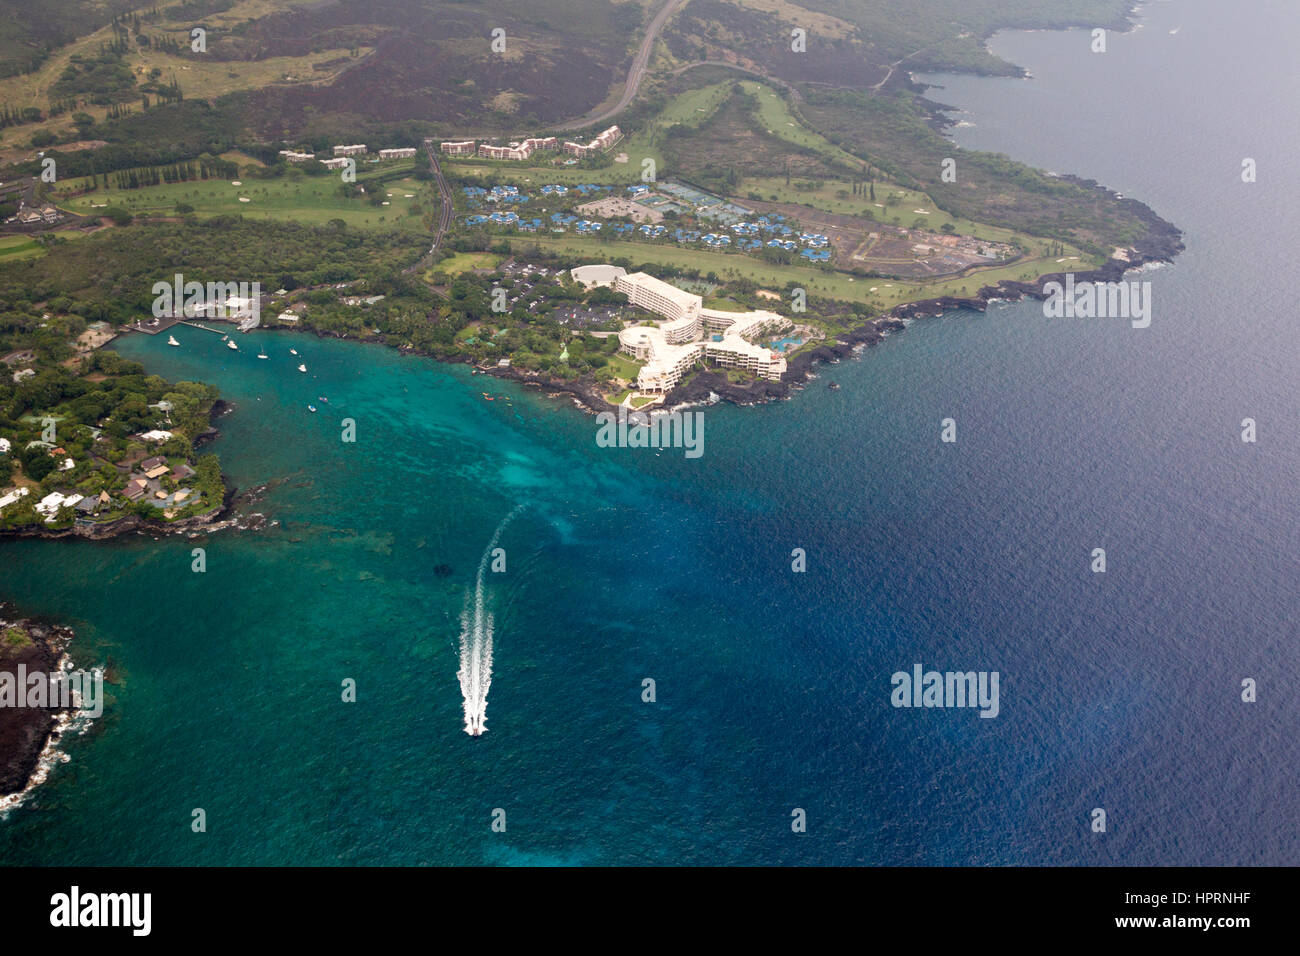 Vue aérienne de l'hôtel Sheraton Kona Resort de Kailua-Kona, Big Island, Hawaii, USA. Banque D'Images